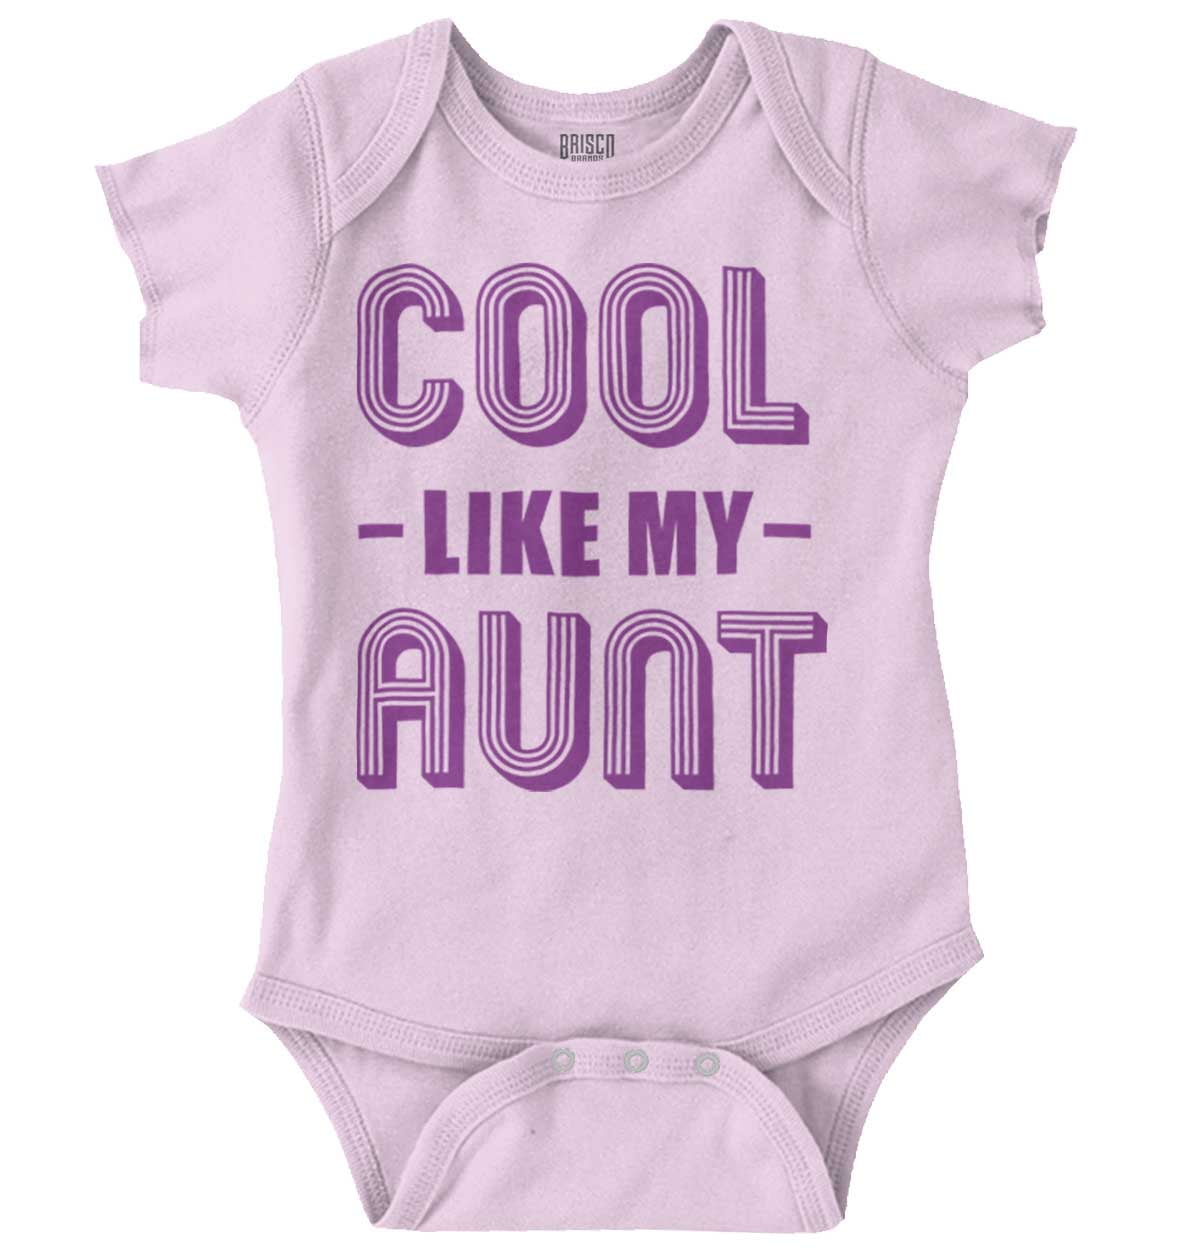 Personalised Baby Vest Bodysuit Romper Funny Humorous Name Number Gift Birthday 